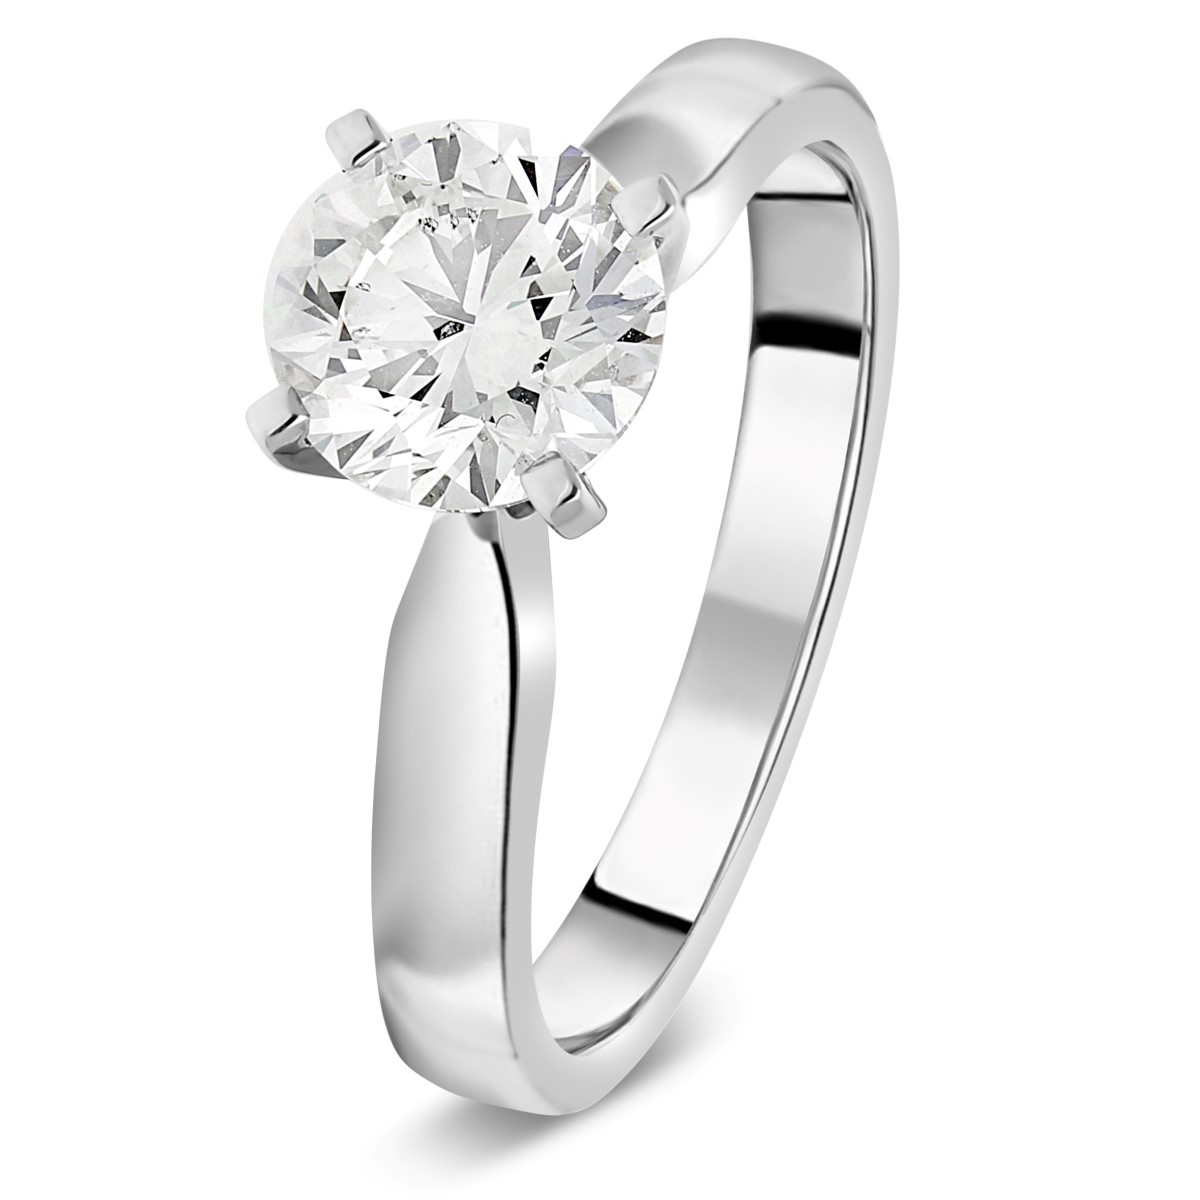 bahamas-solitaires-diamants-certifies-style-classique-platine-950-